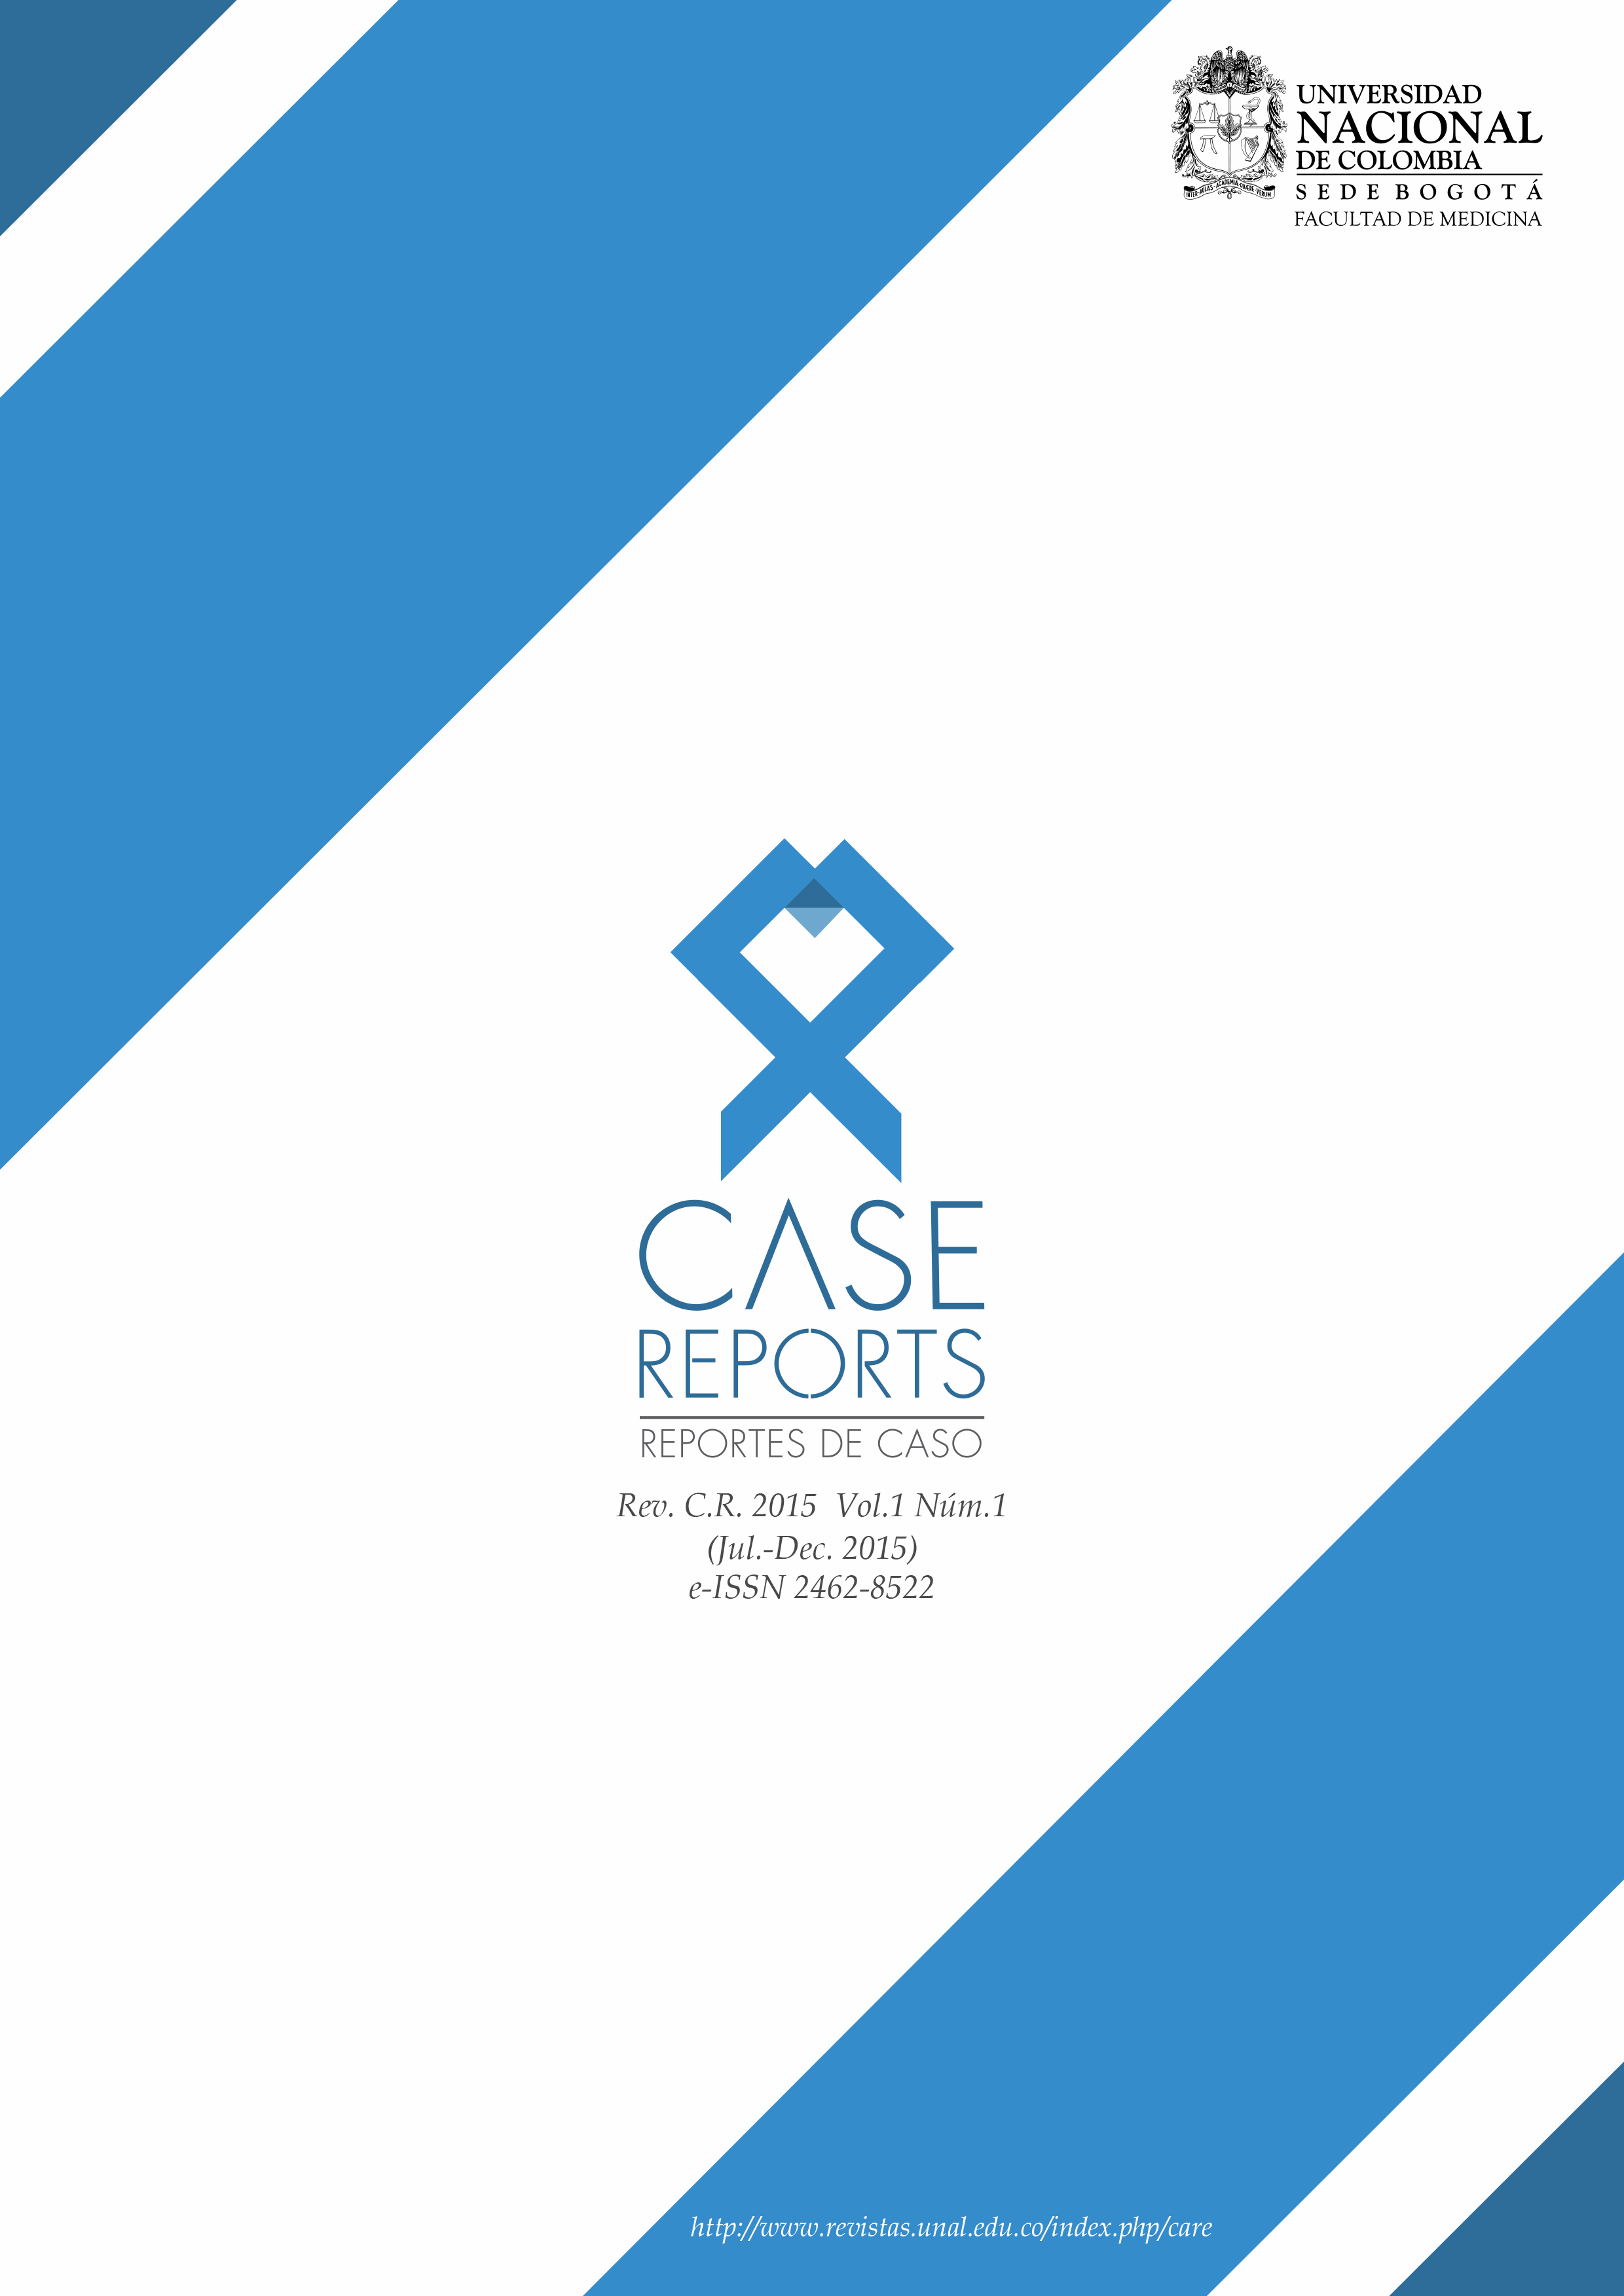 Rev Case Rep Vol. 1, Núm. 1 (Jul.-Dic. 2015)